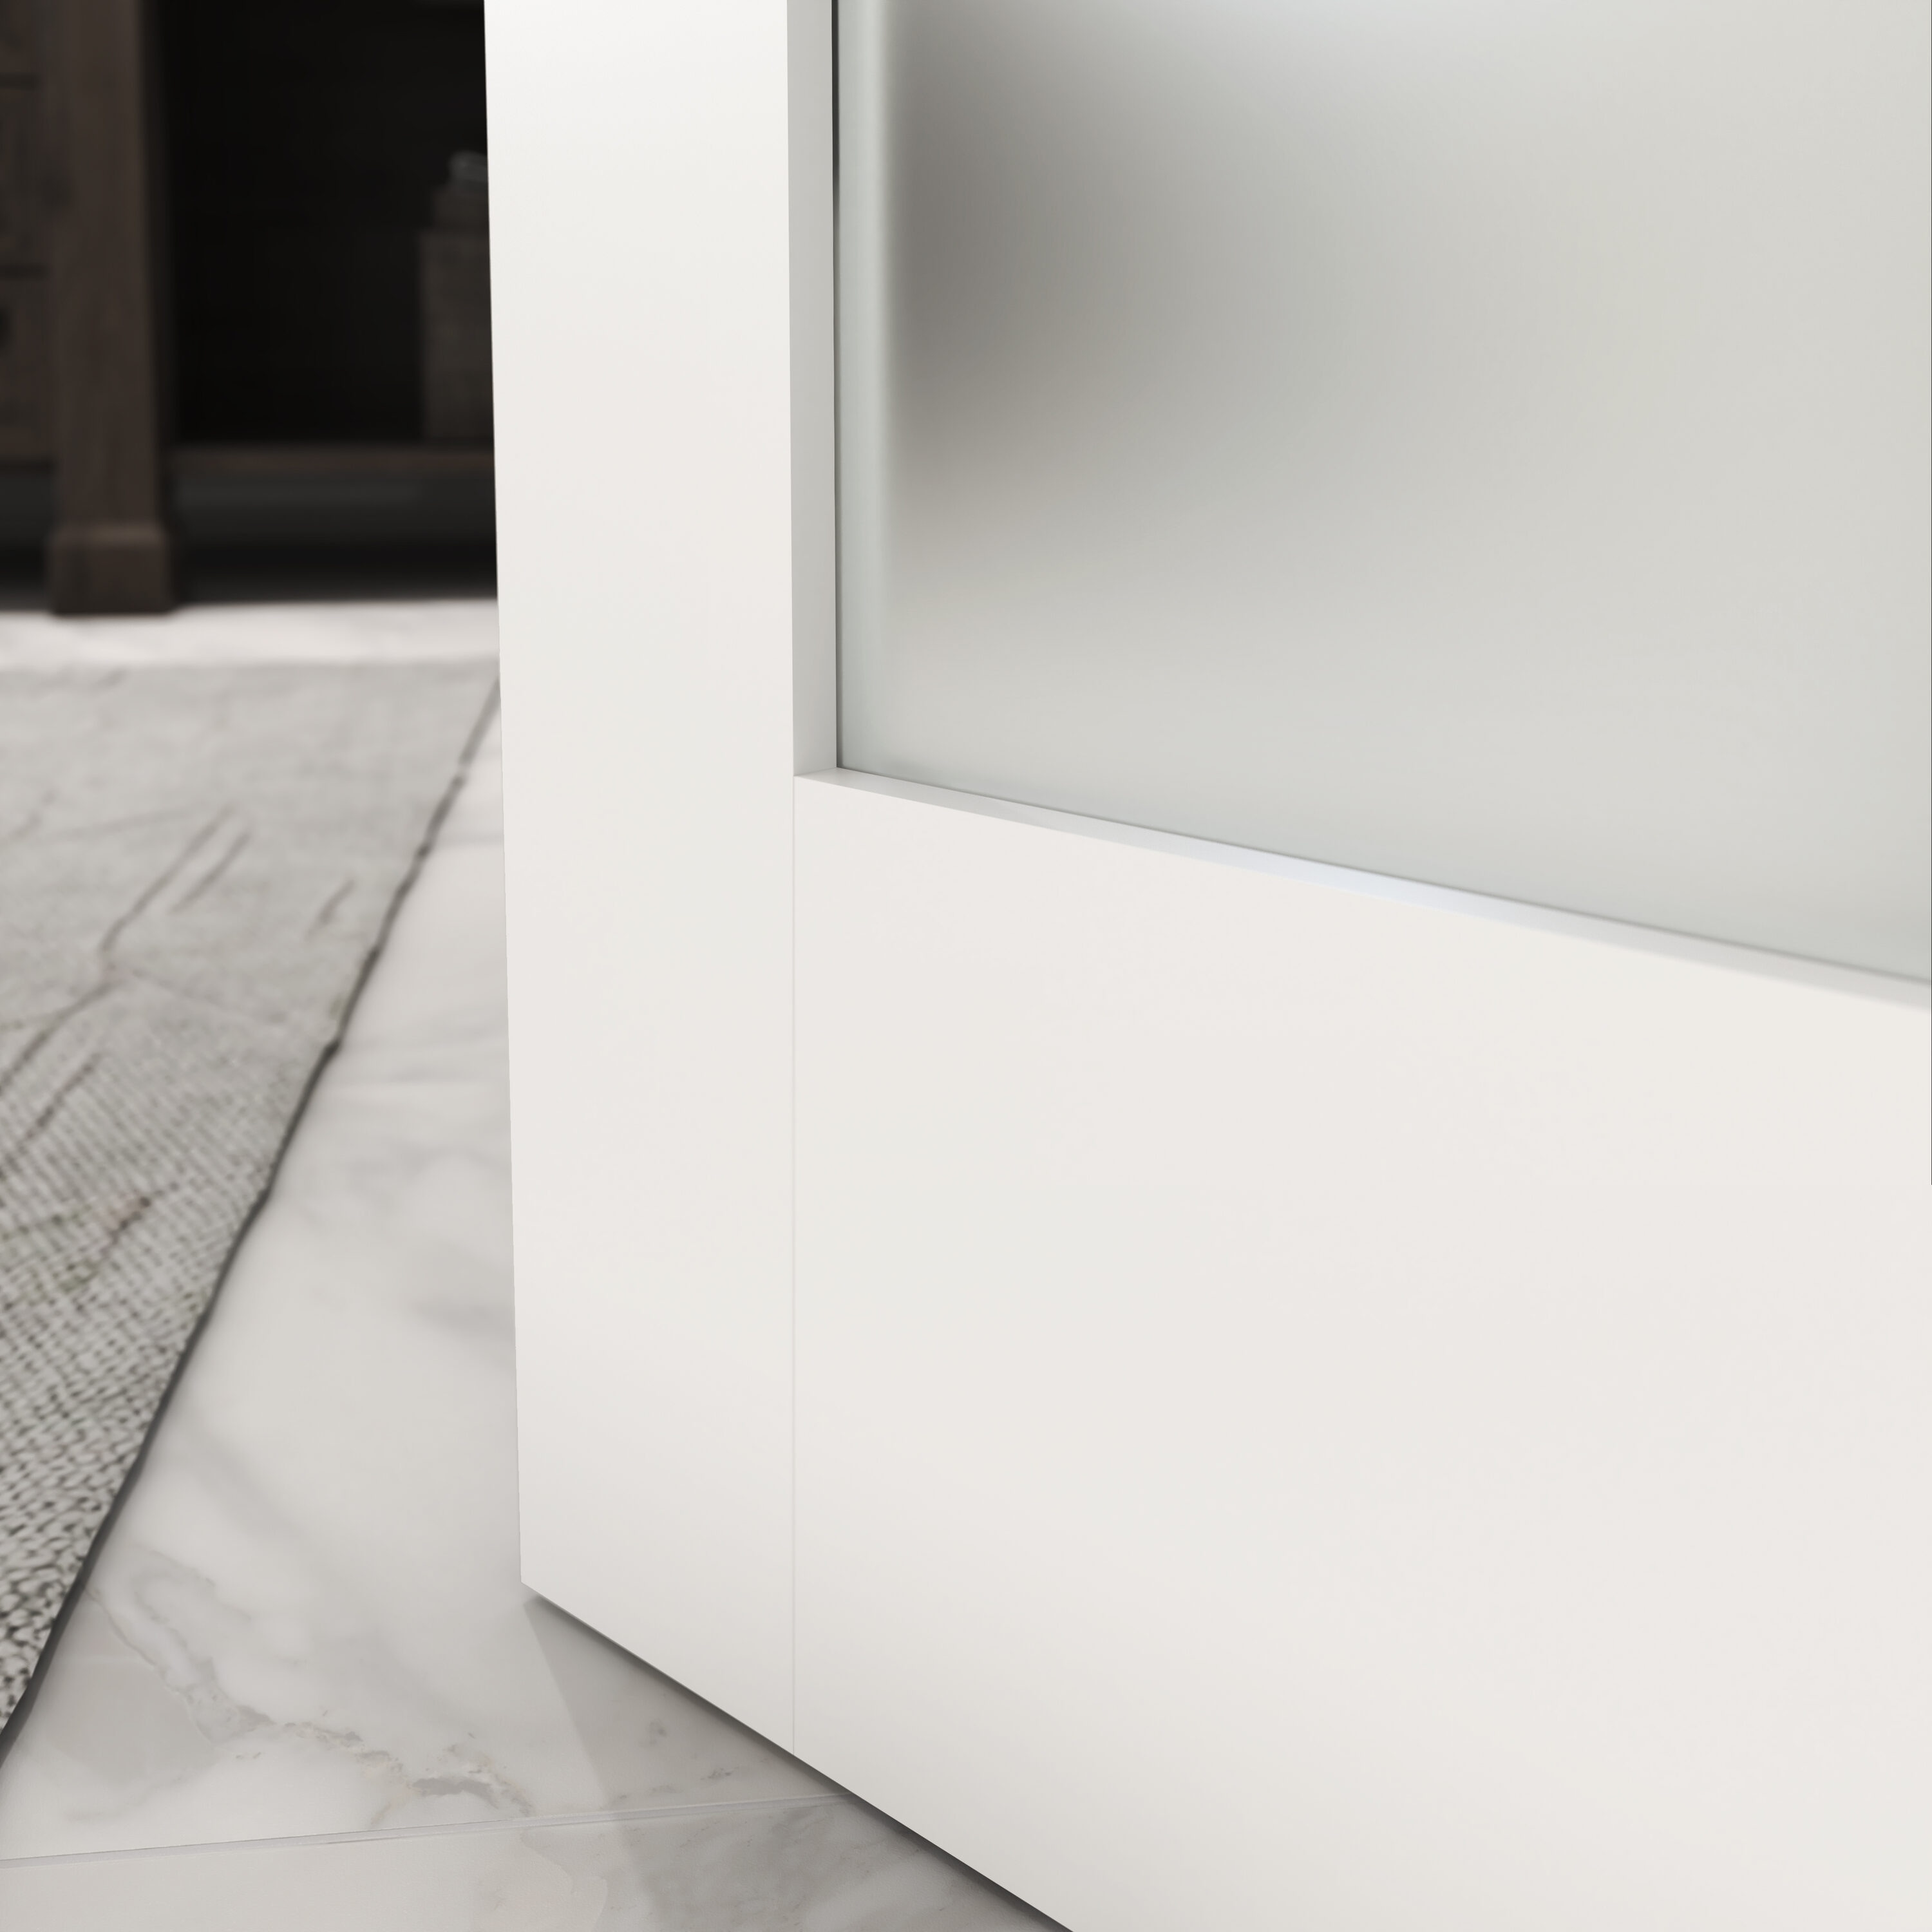 amazon 30/ 80 inch glass white barn door solid lvl wood